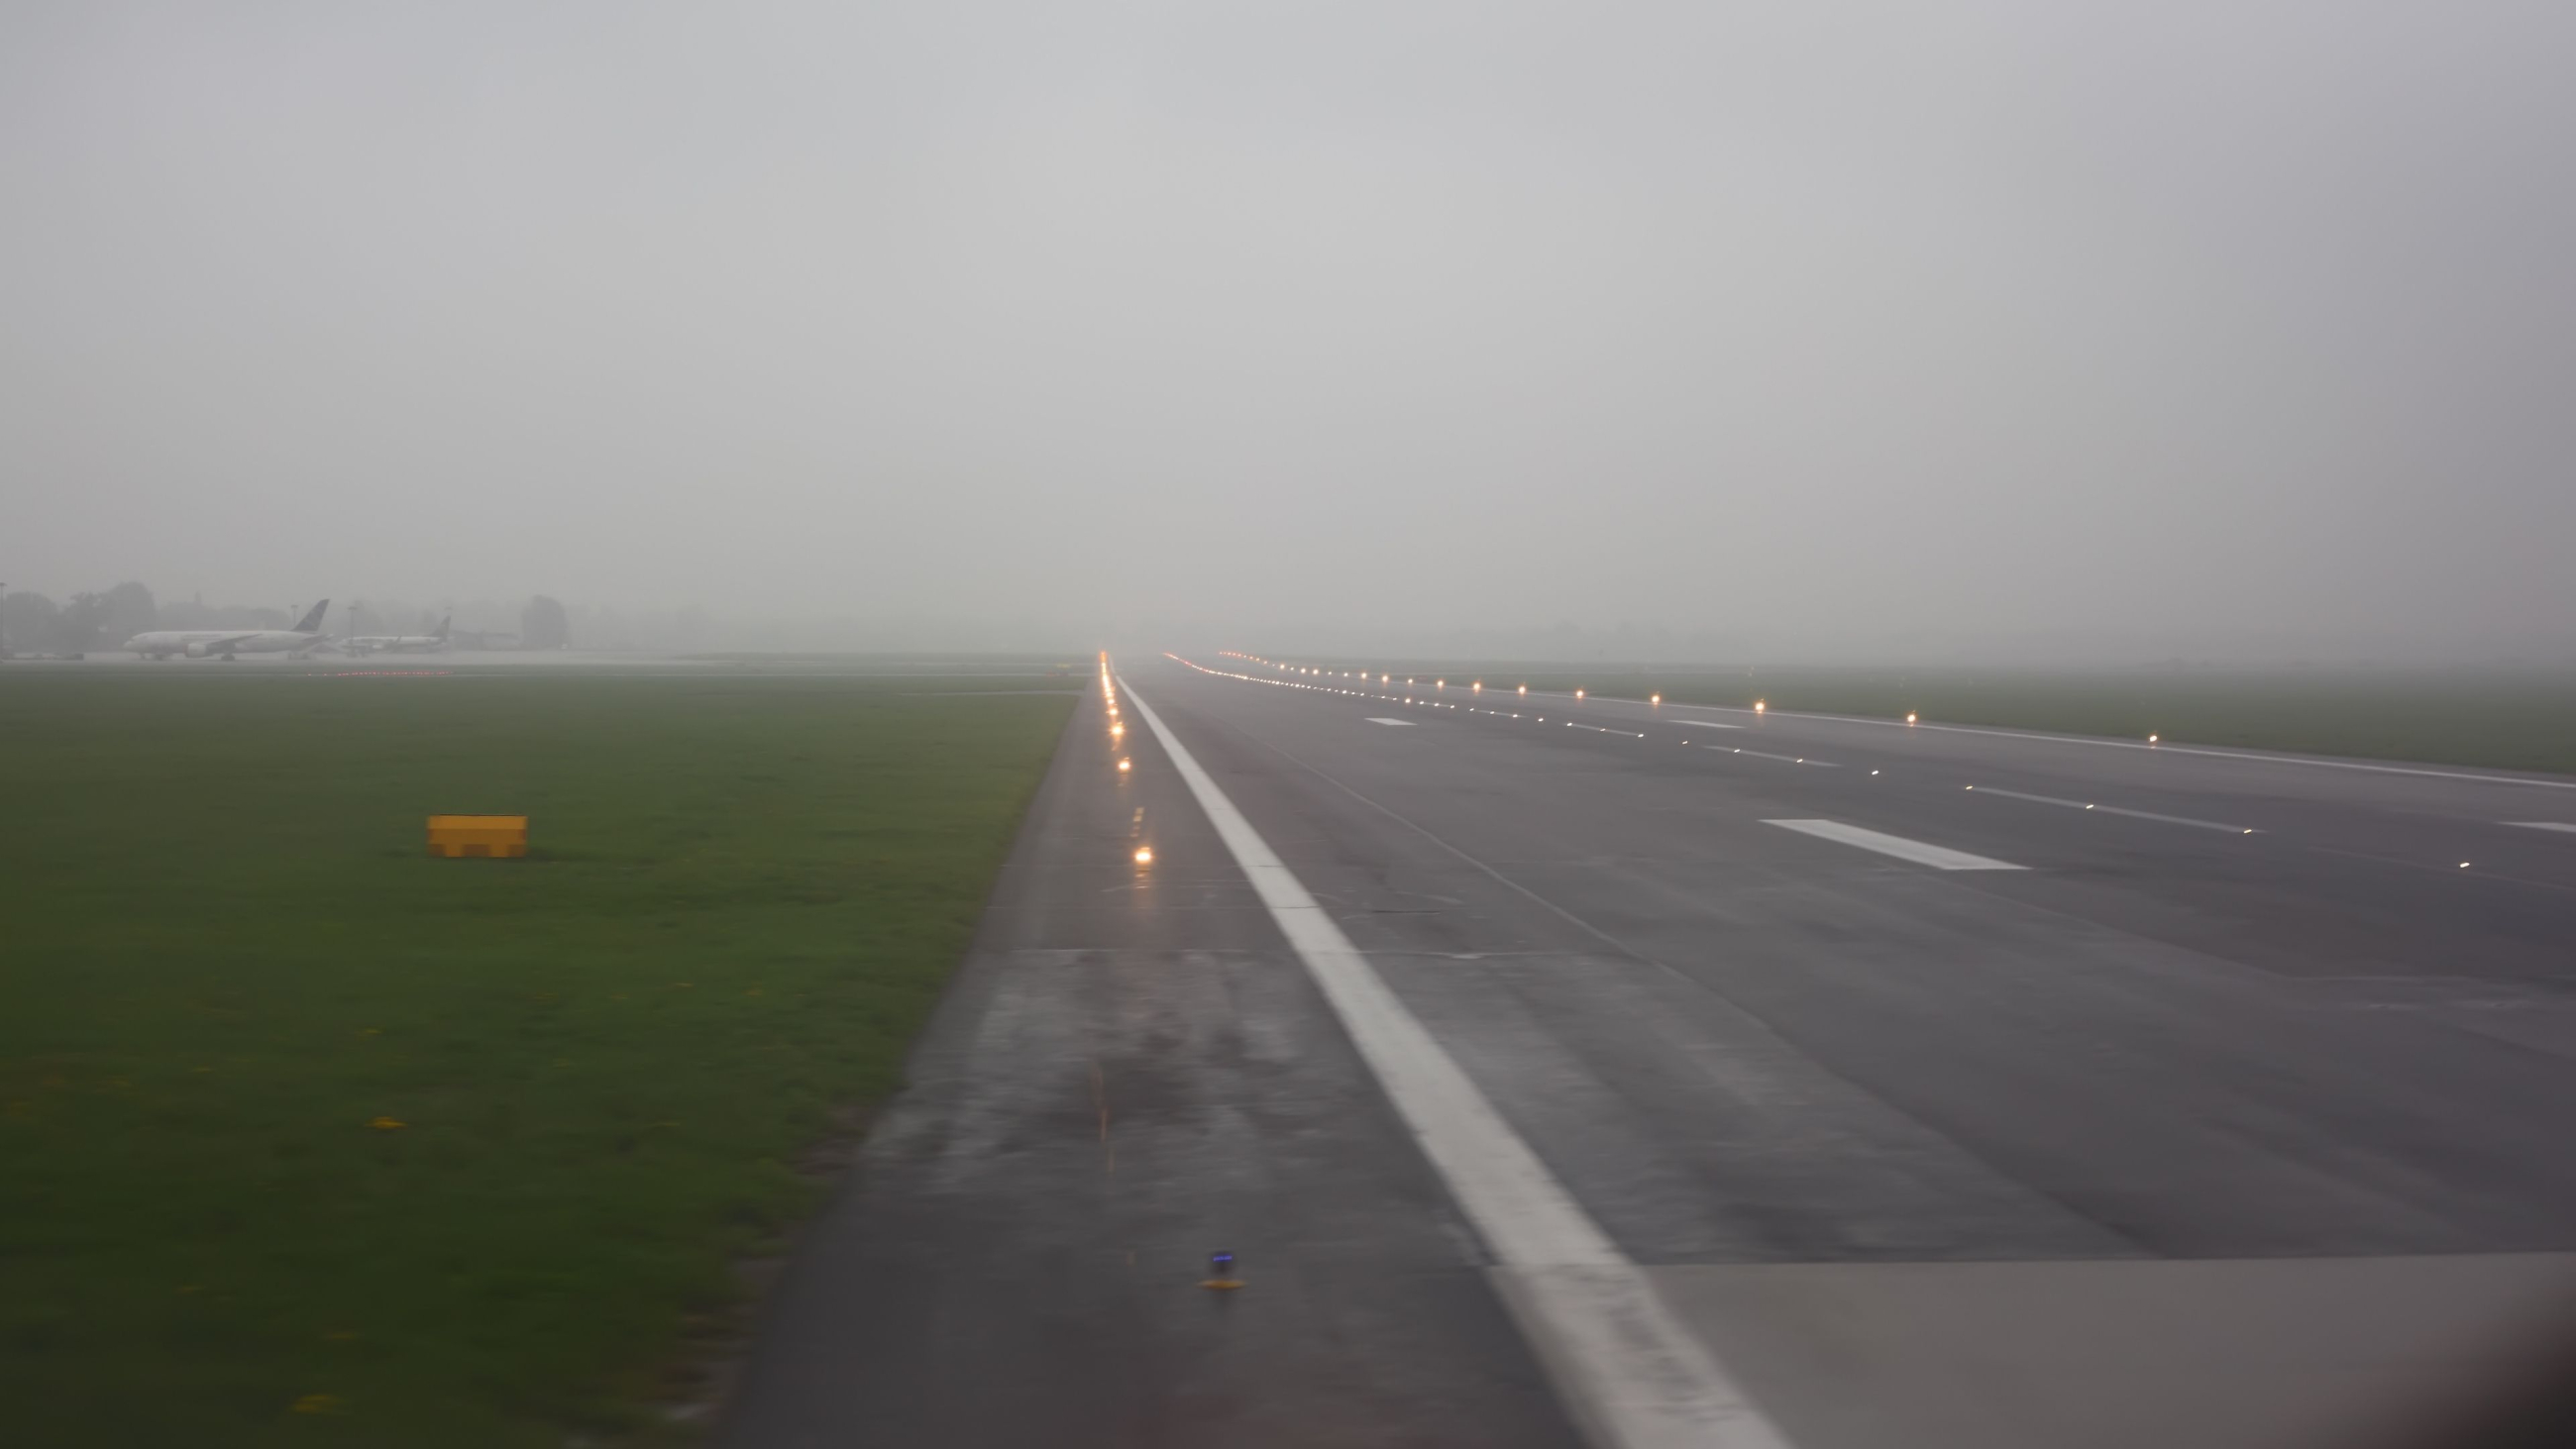 AWW - Fog on Runway